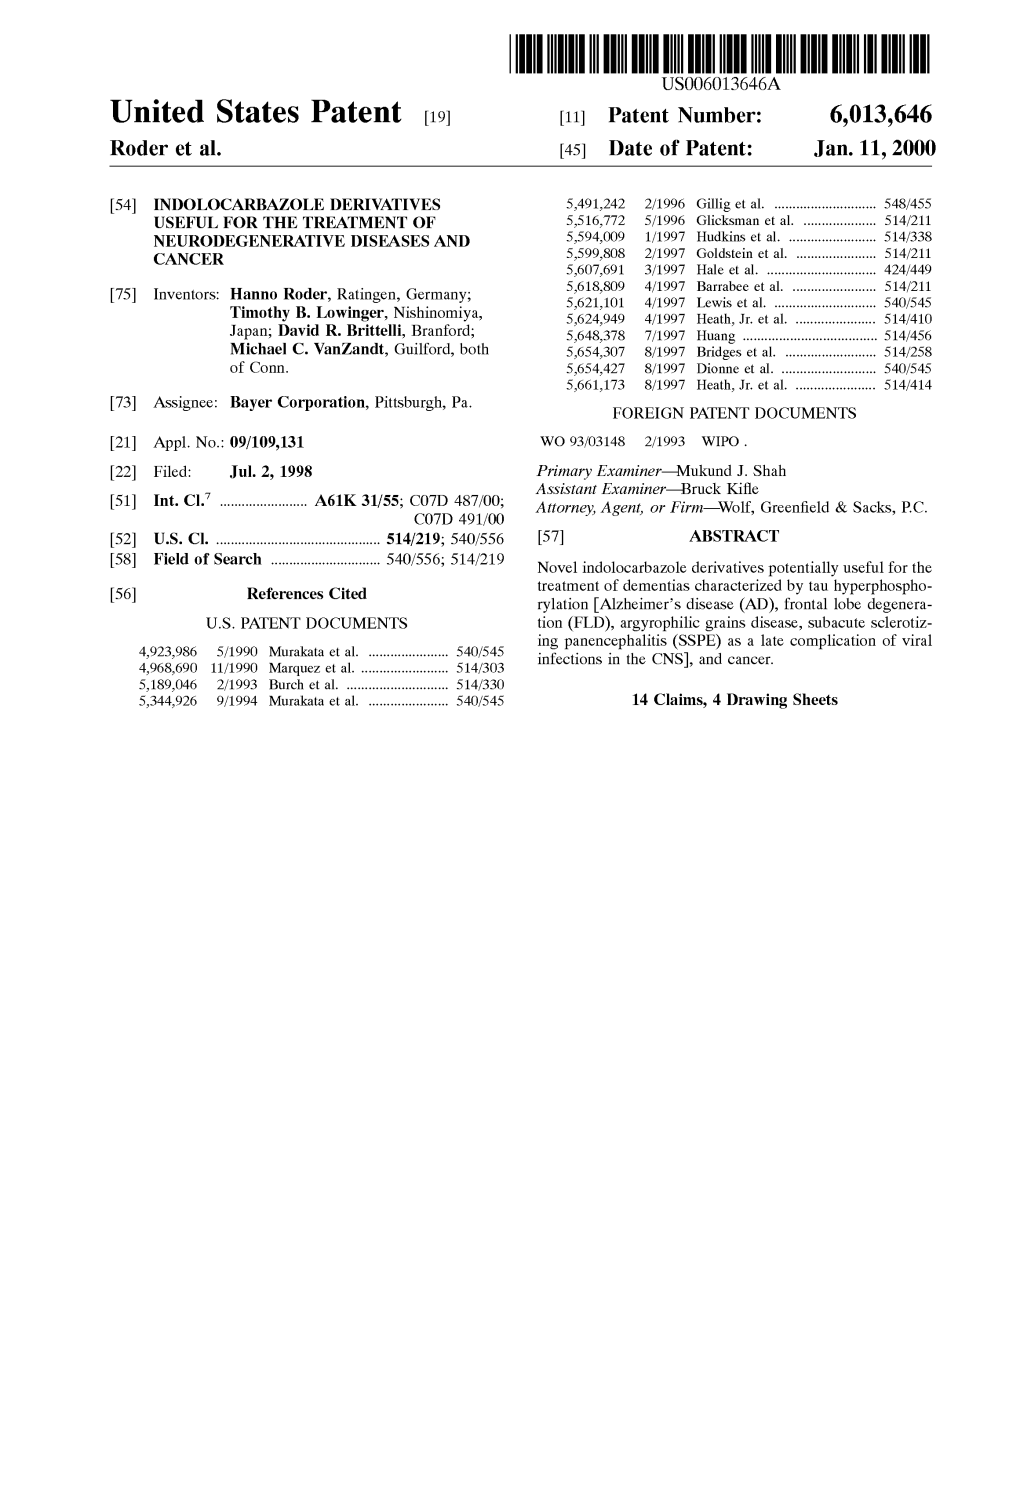 United States Patent (19) 11 Patent Number: 6,013,646 Roder Et Al